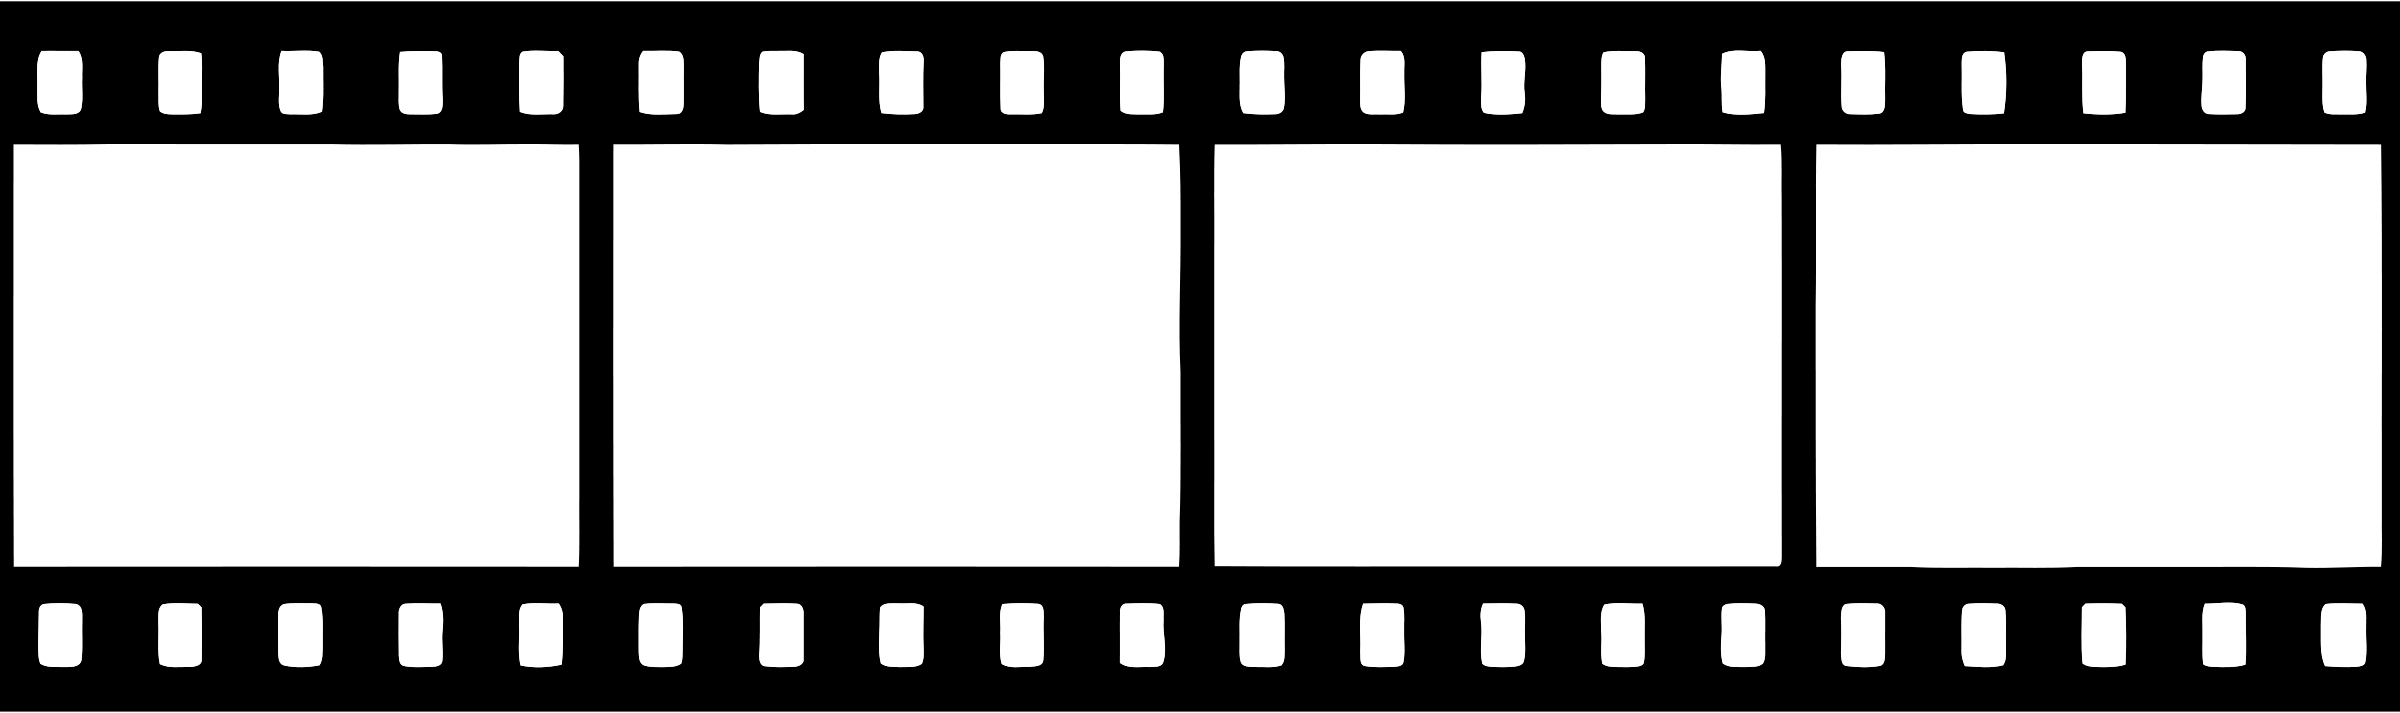 Video Film Clipart